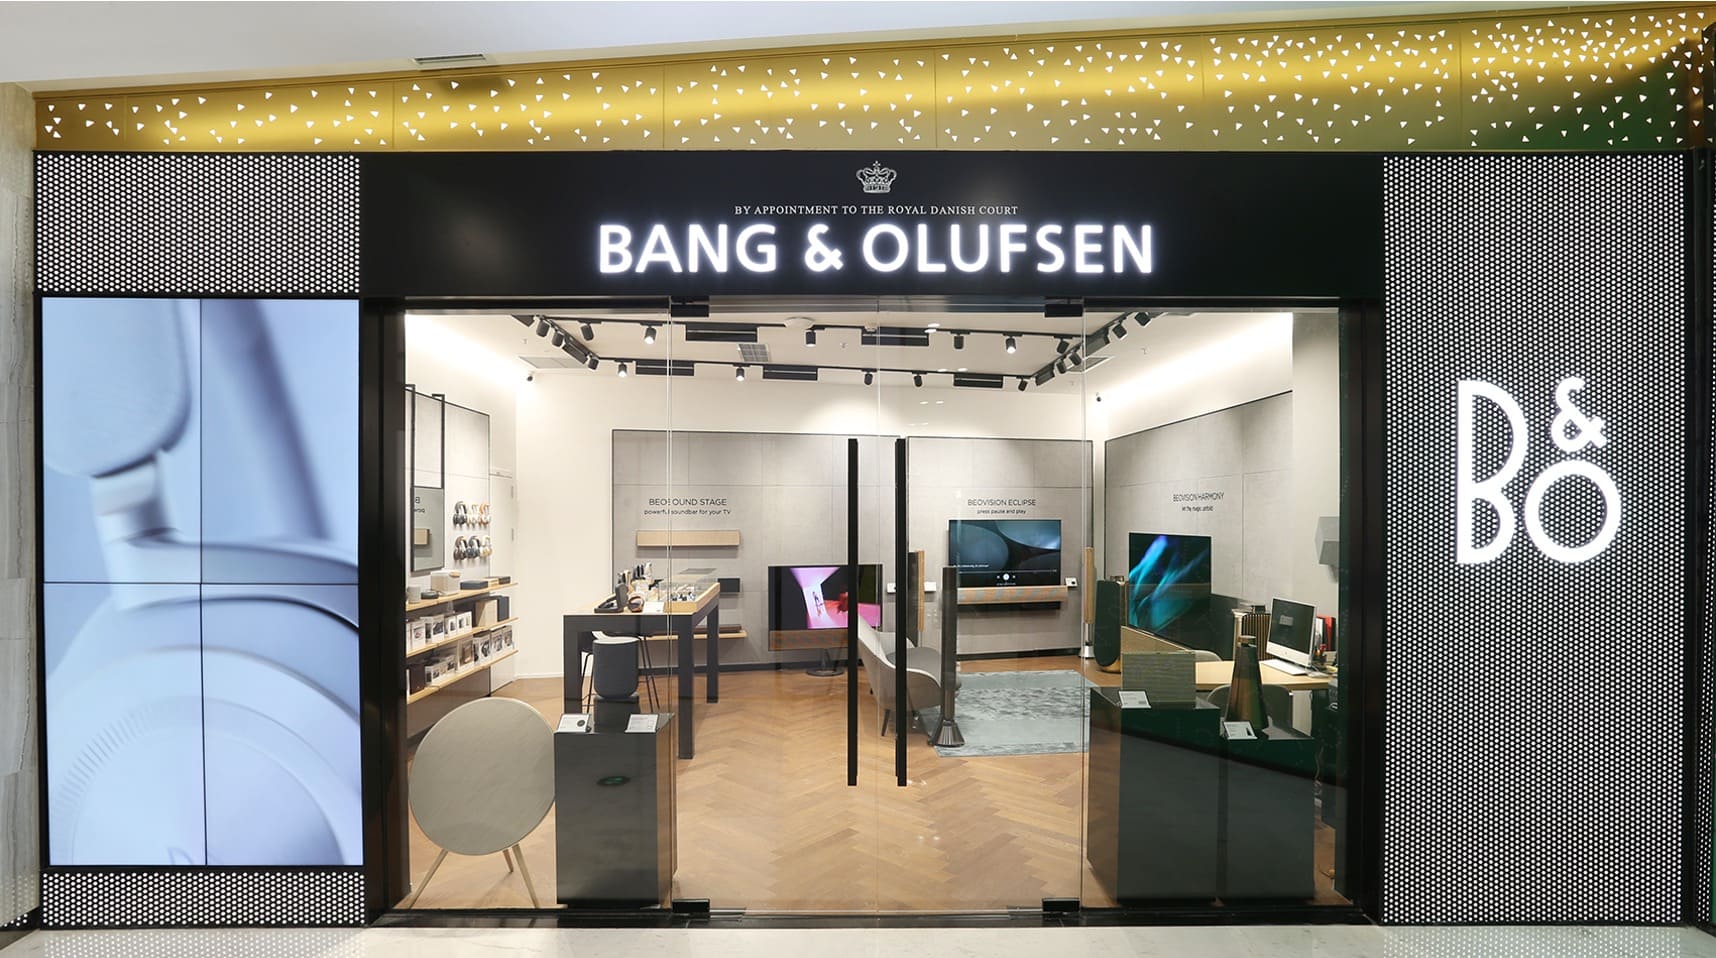 Bang & Olufsen Starlight 68 - LA1-43店铺, 重庆星光68广场, 洋河一路68号